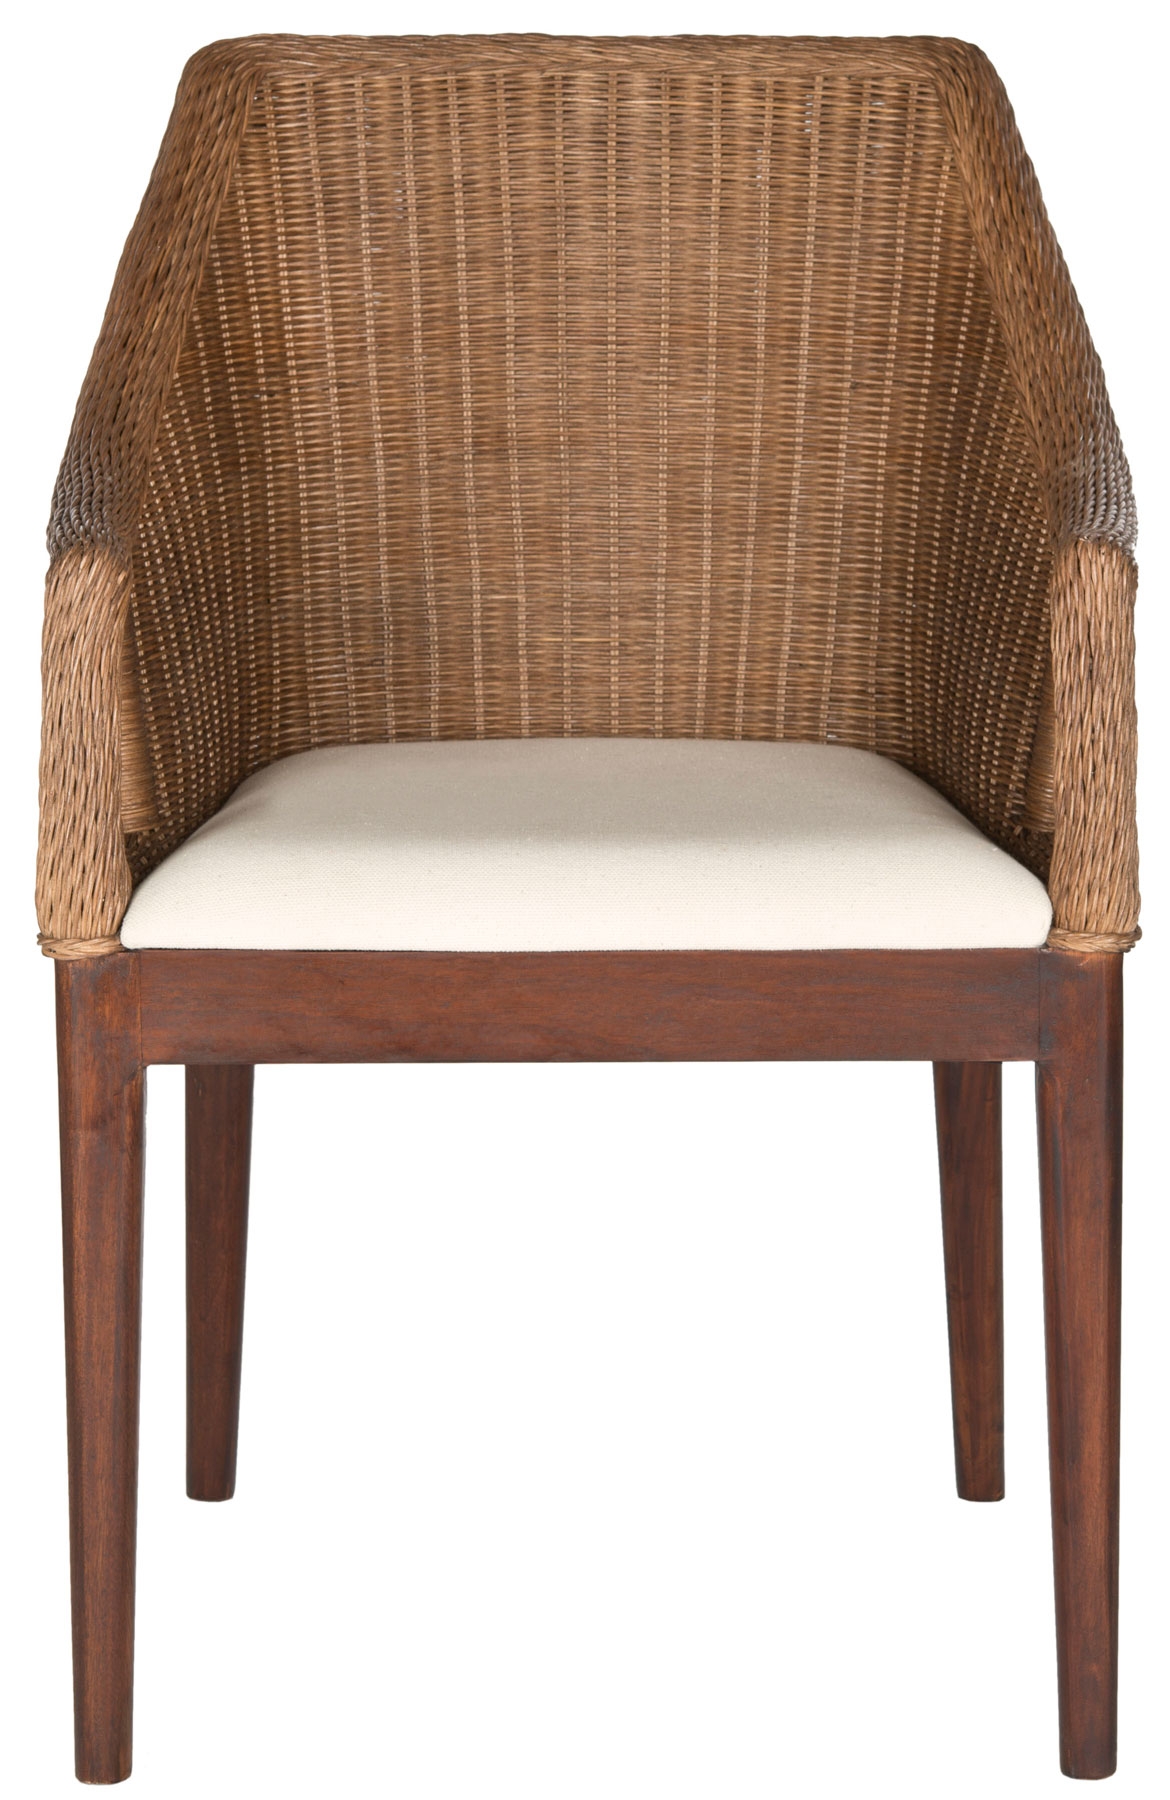 Monterey Arm Chair - Image 1